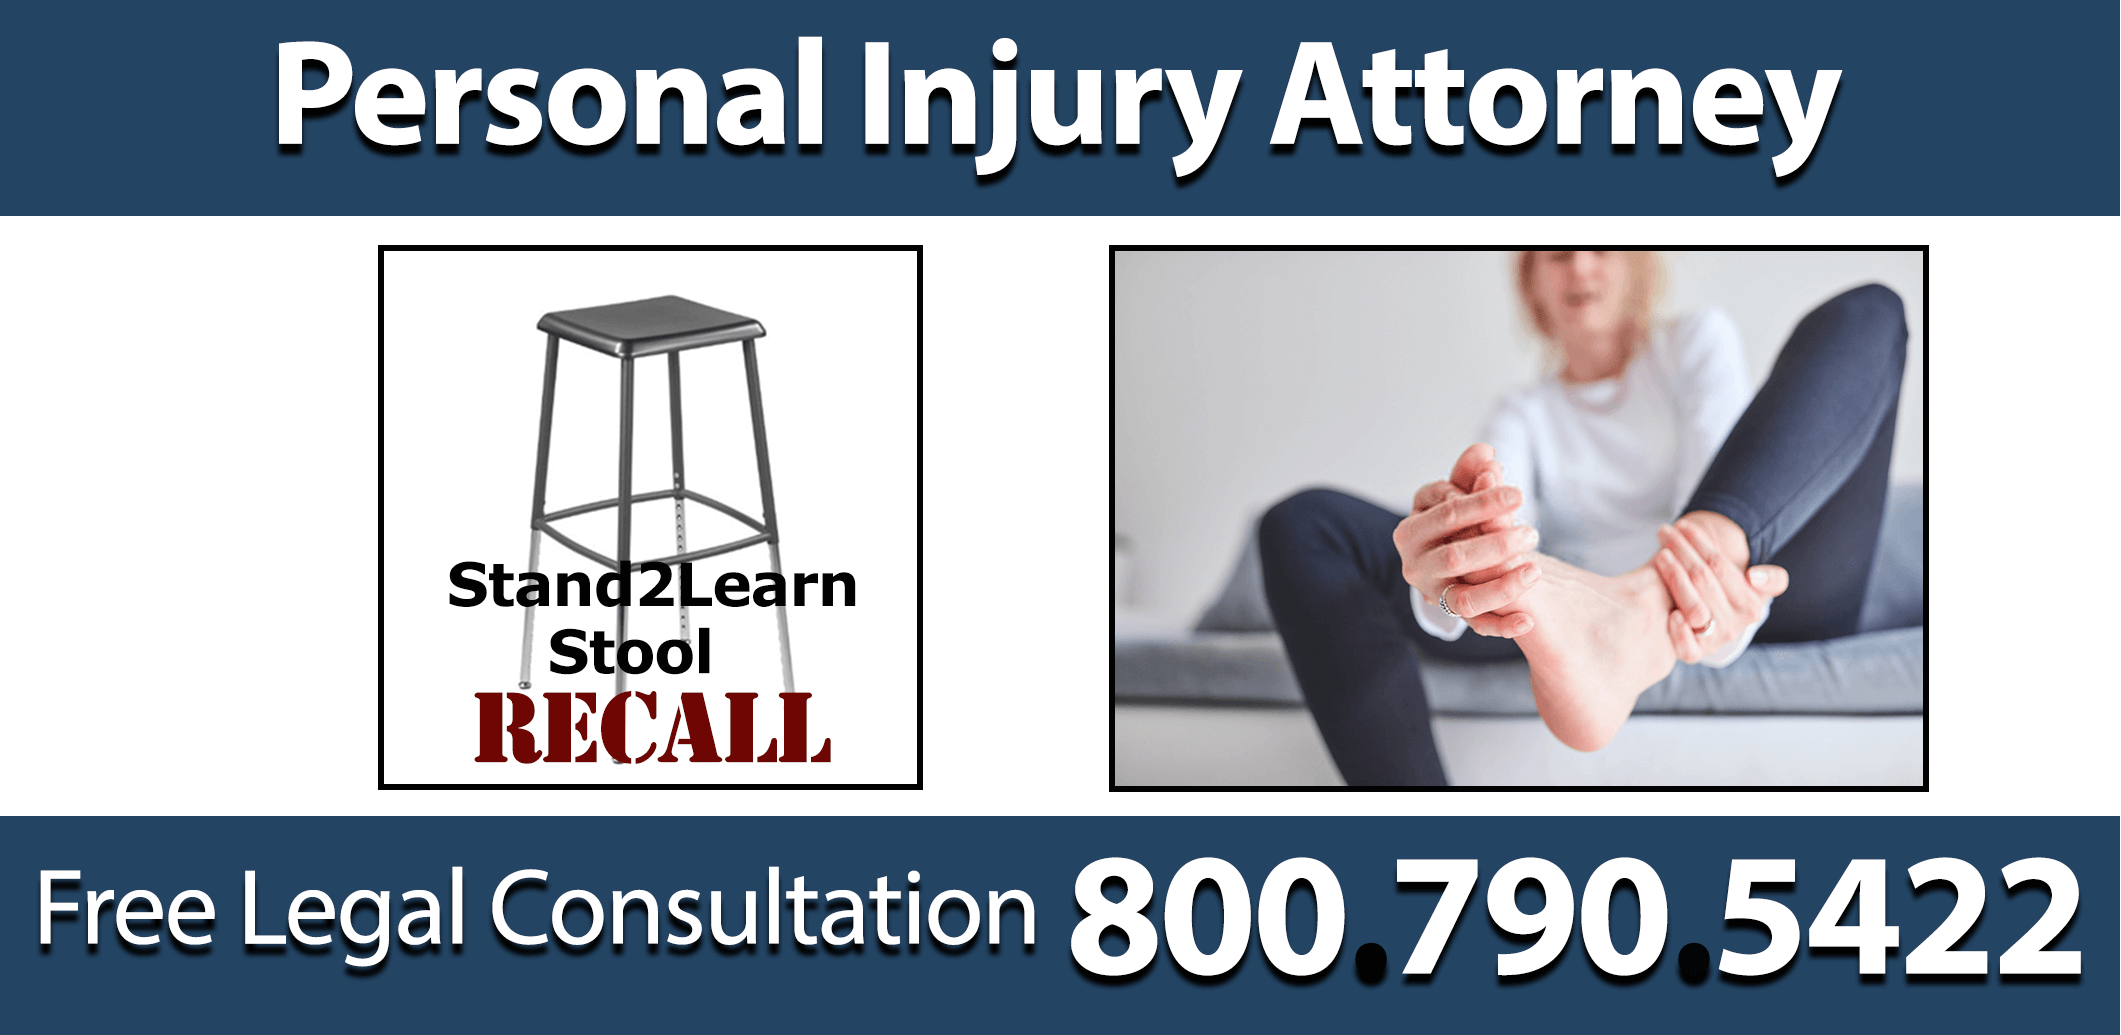 Varidesk stand2learn stool recall injury hazard fall risk personal injury lawyer maximum compensation attorney sue injured 